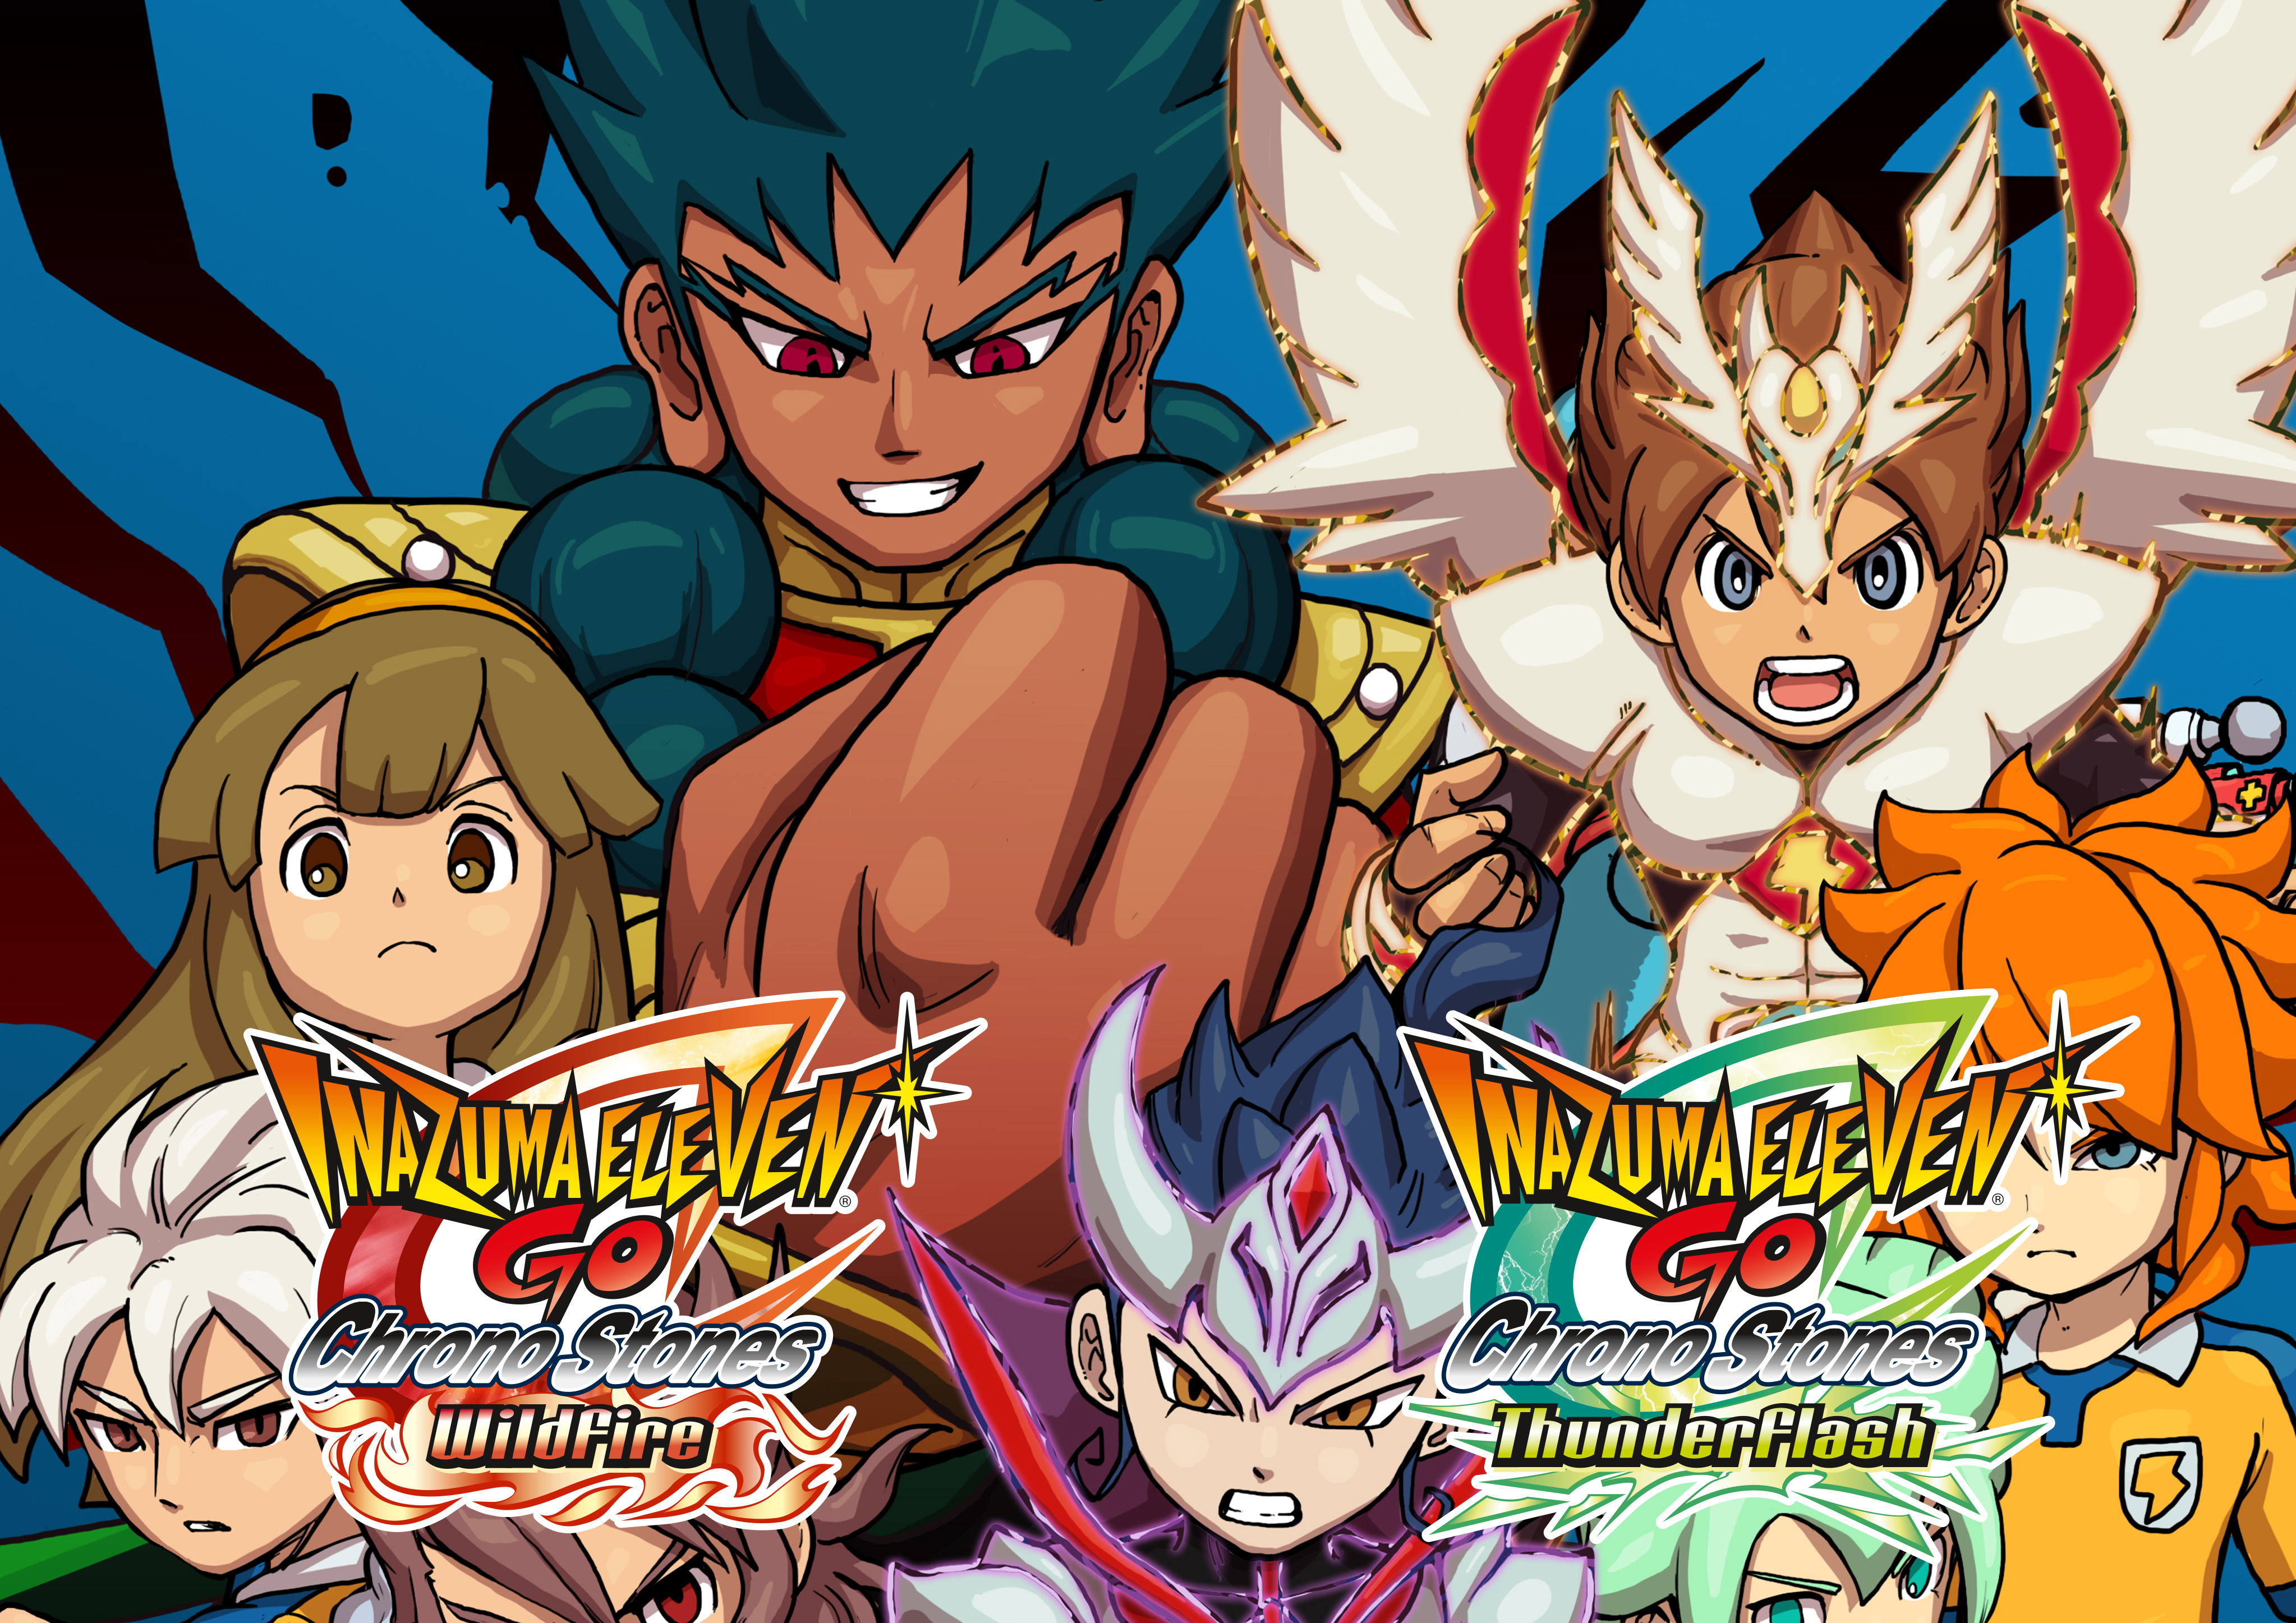 3DS - Inazuma Eleven GO: Chrono Stones: Wildfire / Thunderflash